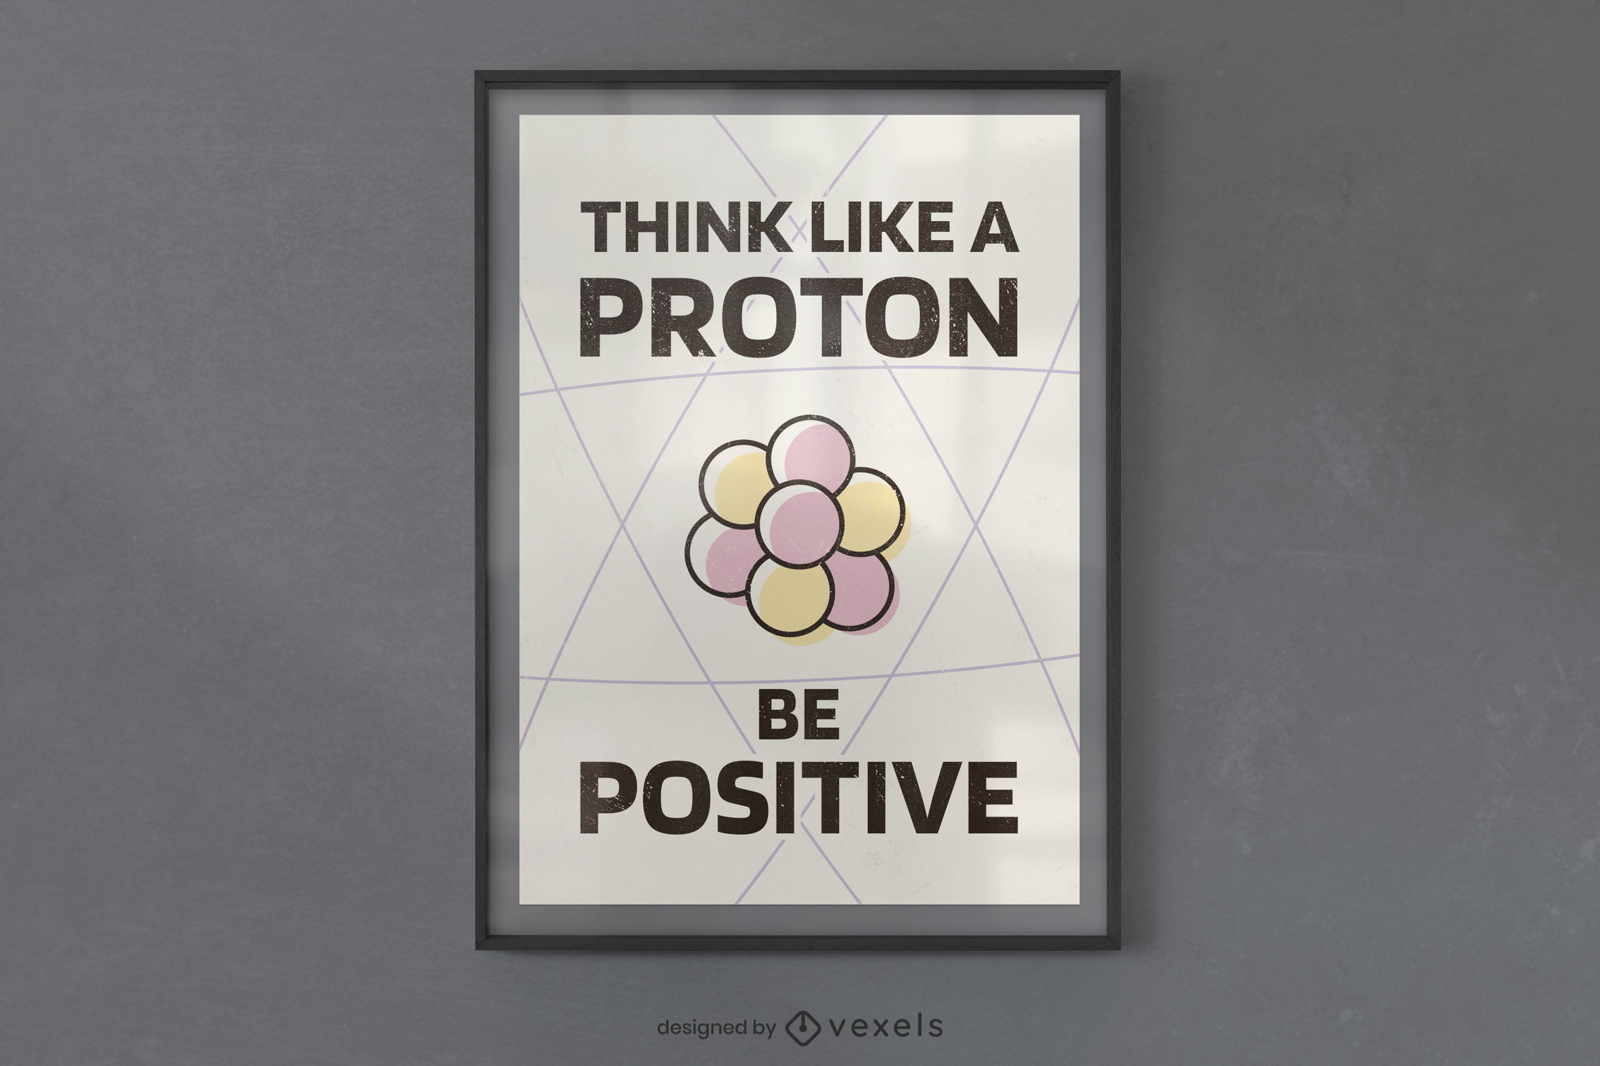 Proton science education poster design